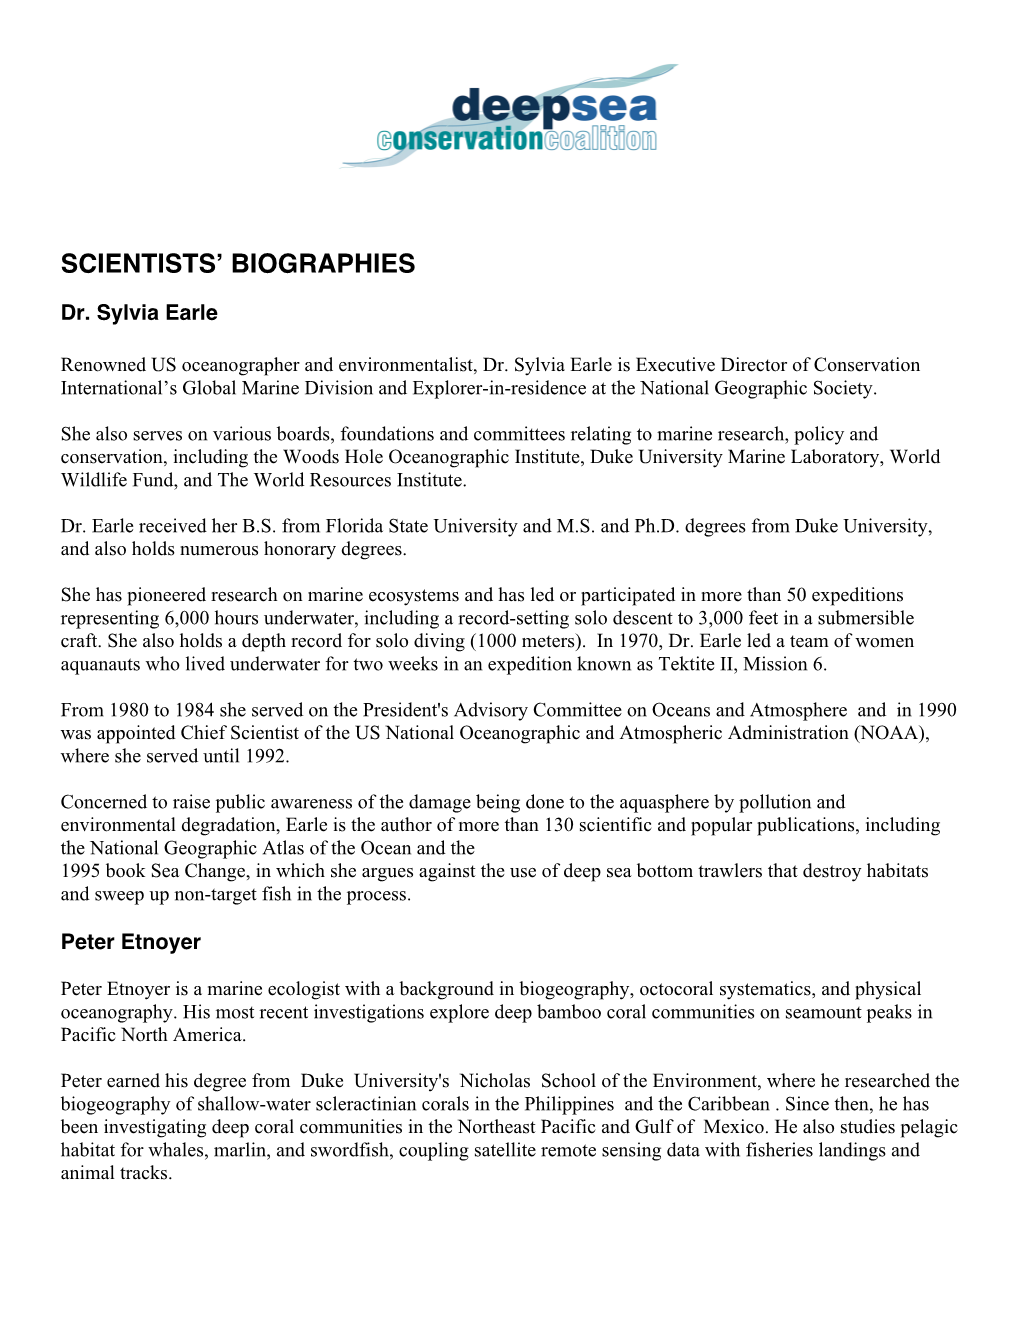 Scientists' Biographies